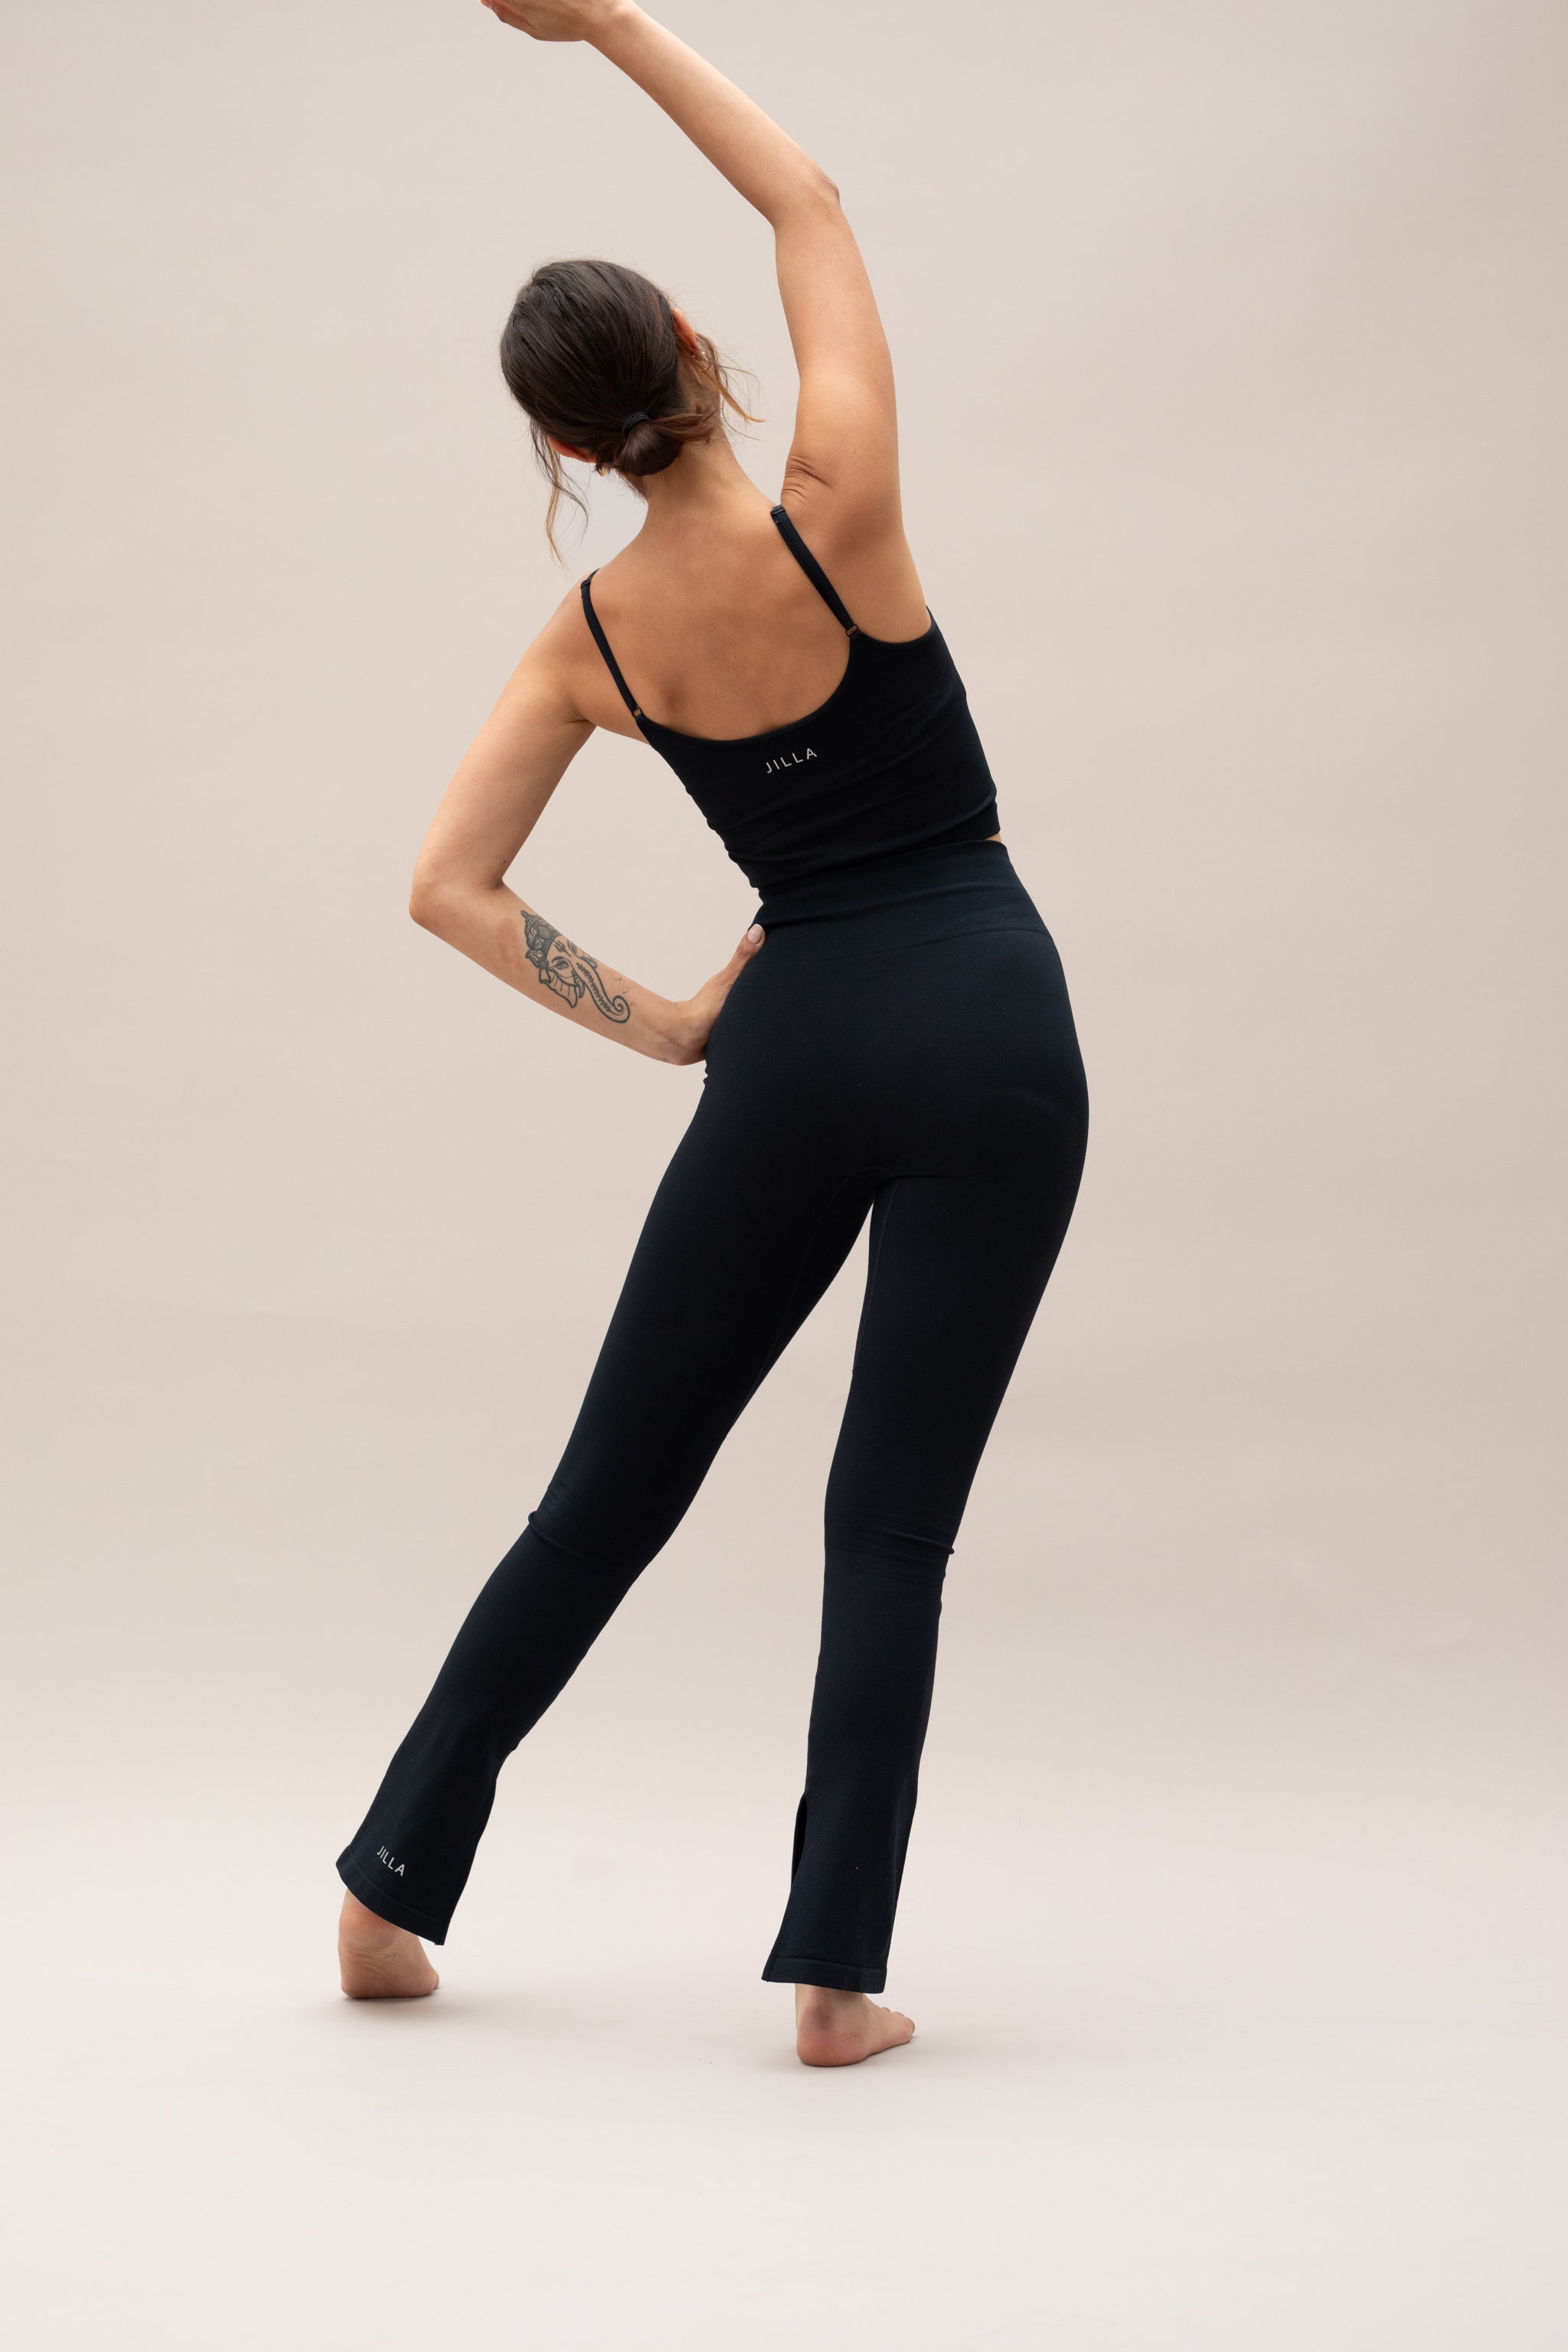 Model wearing black top and black leggings for sustainable activewear Jilla